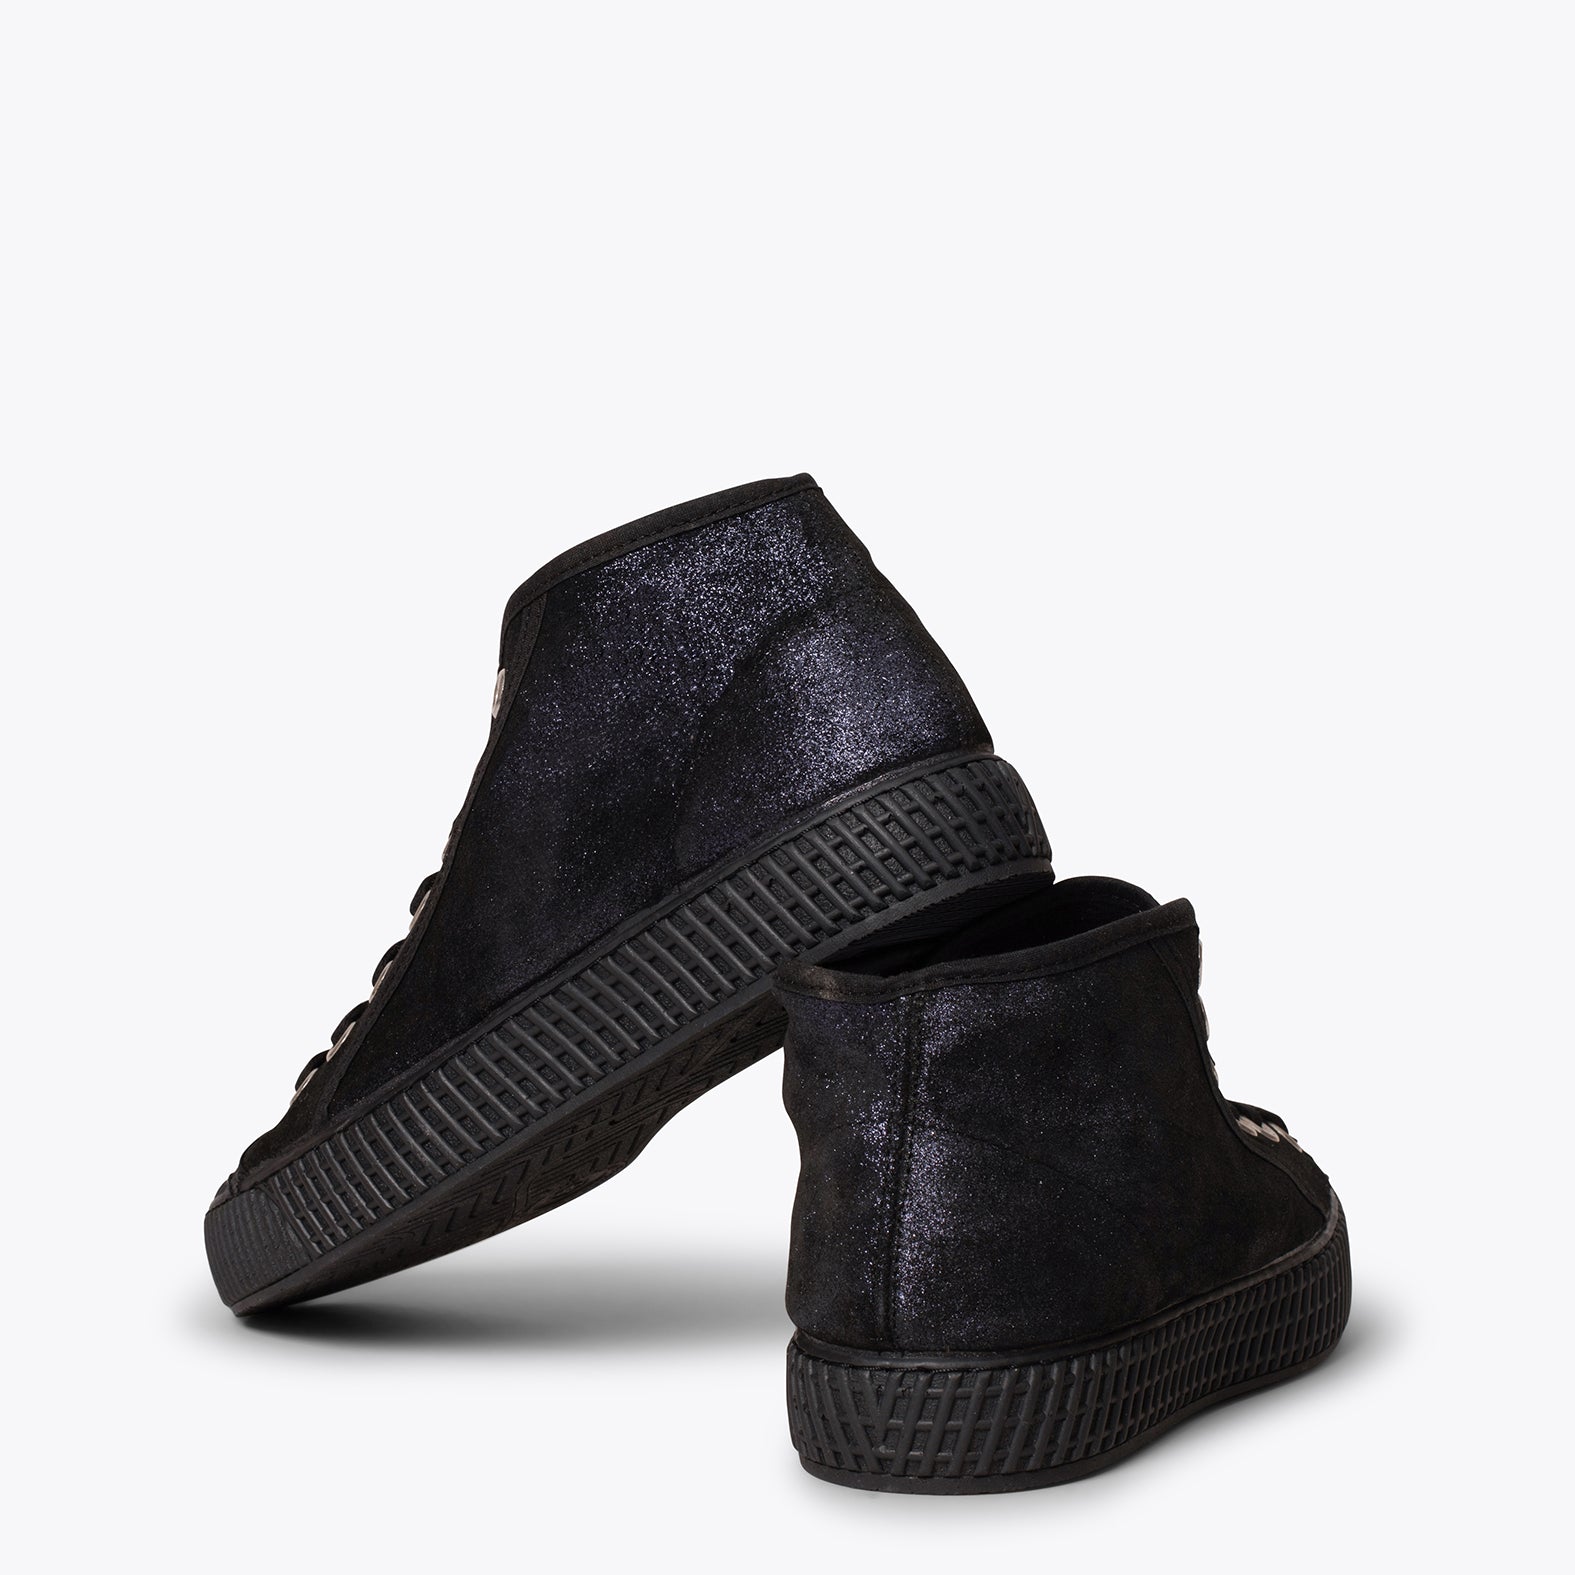 JUMP – NAVY metallic nappa leather sneakers